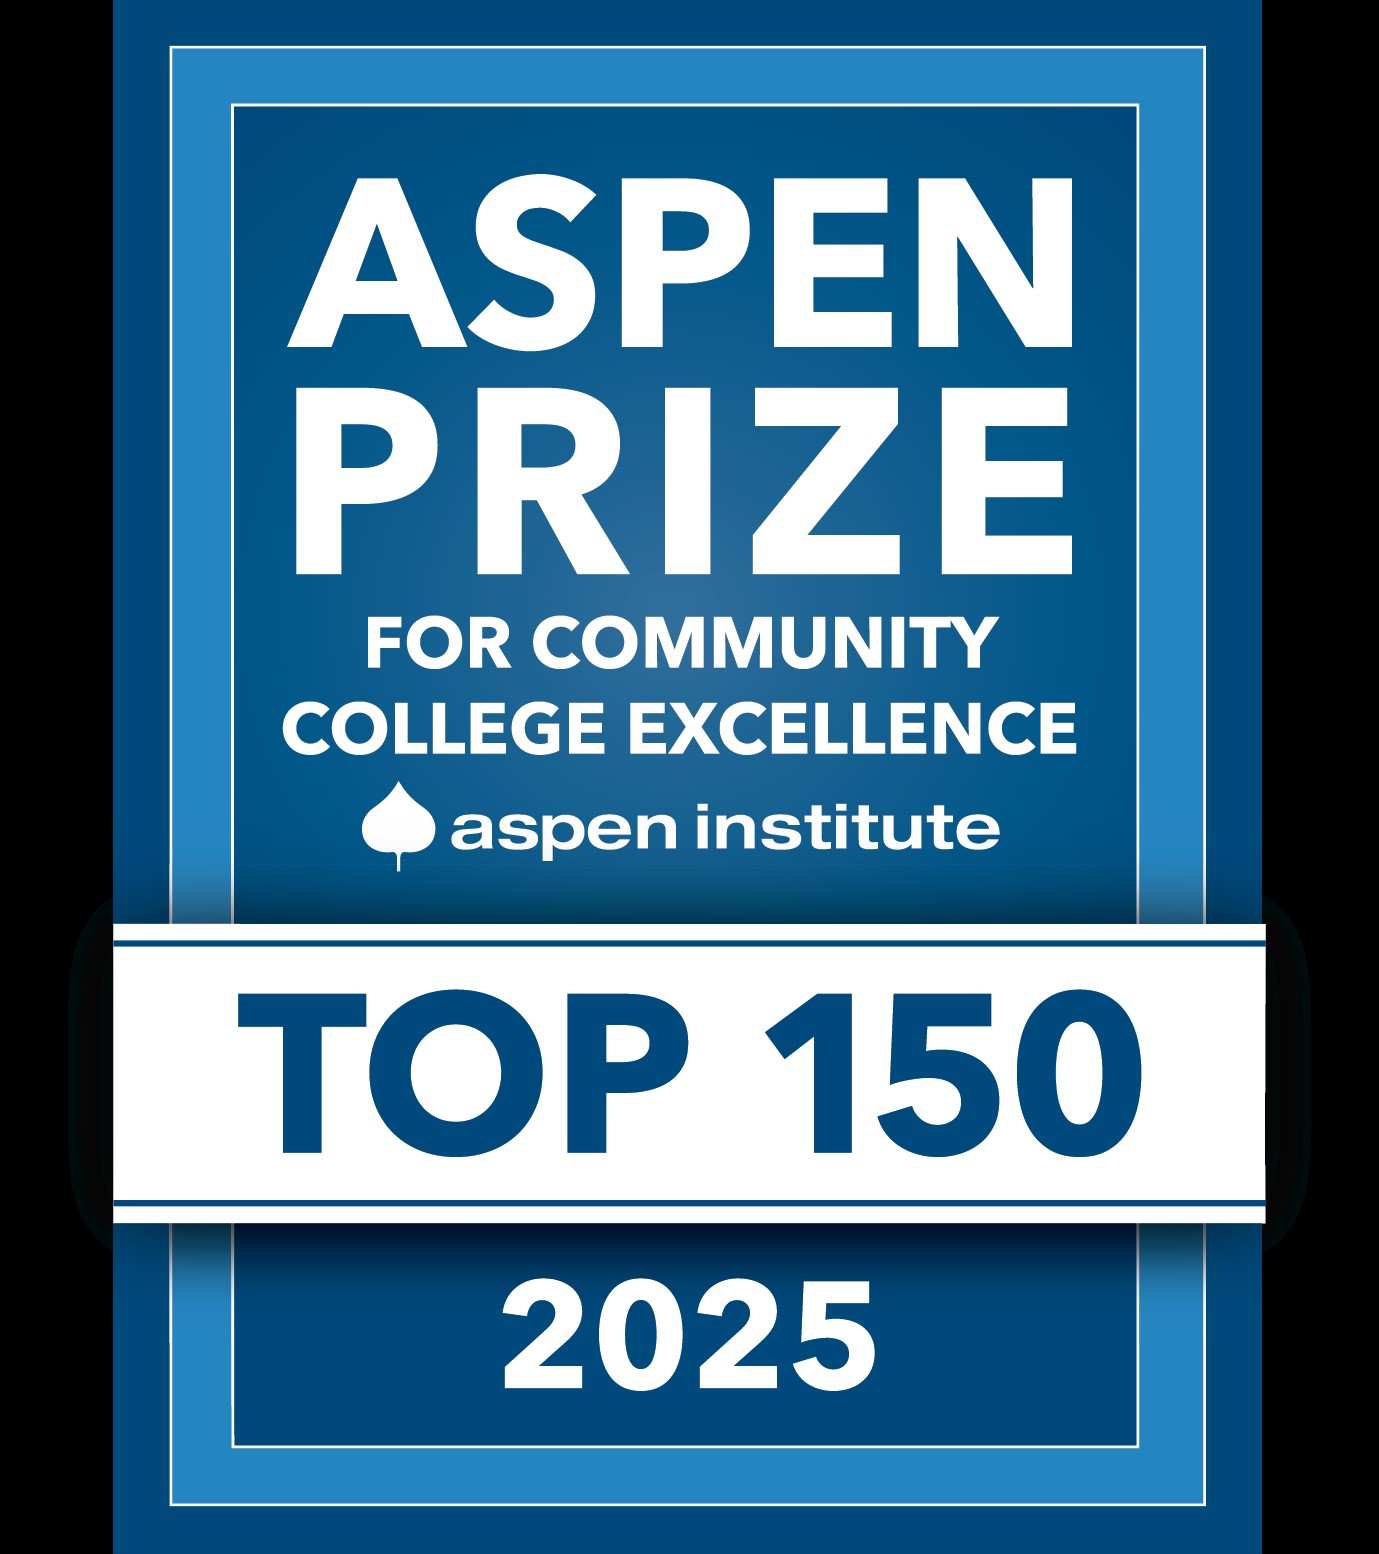 2025 Aspen Prize Top 150 schools graphic